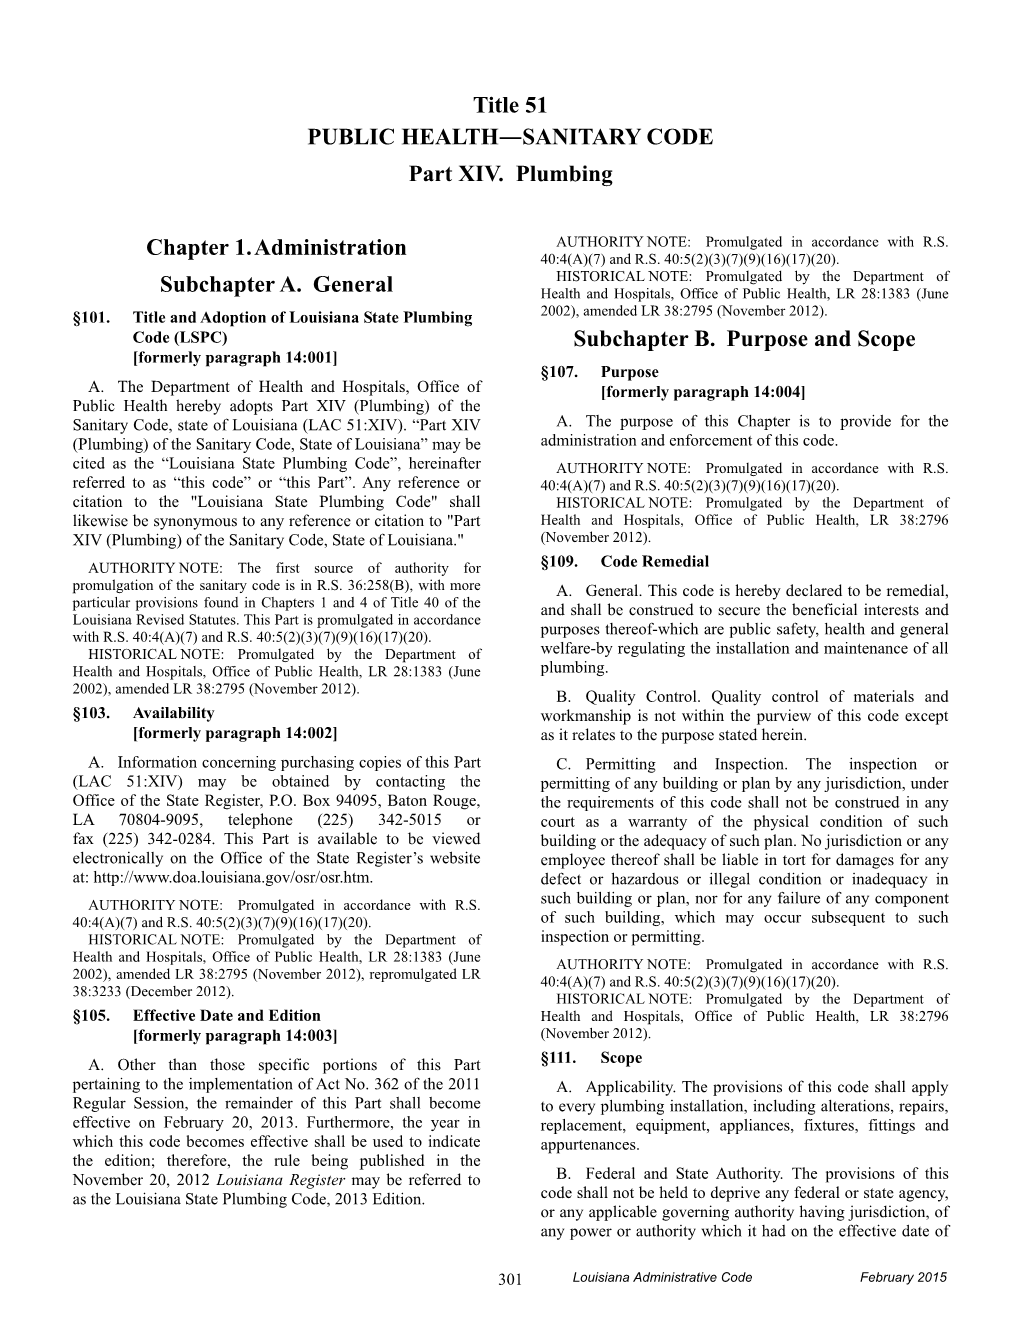 Louisiana State Plumbing Code, 2013 Edition